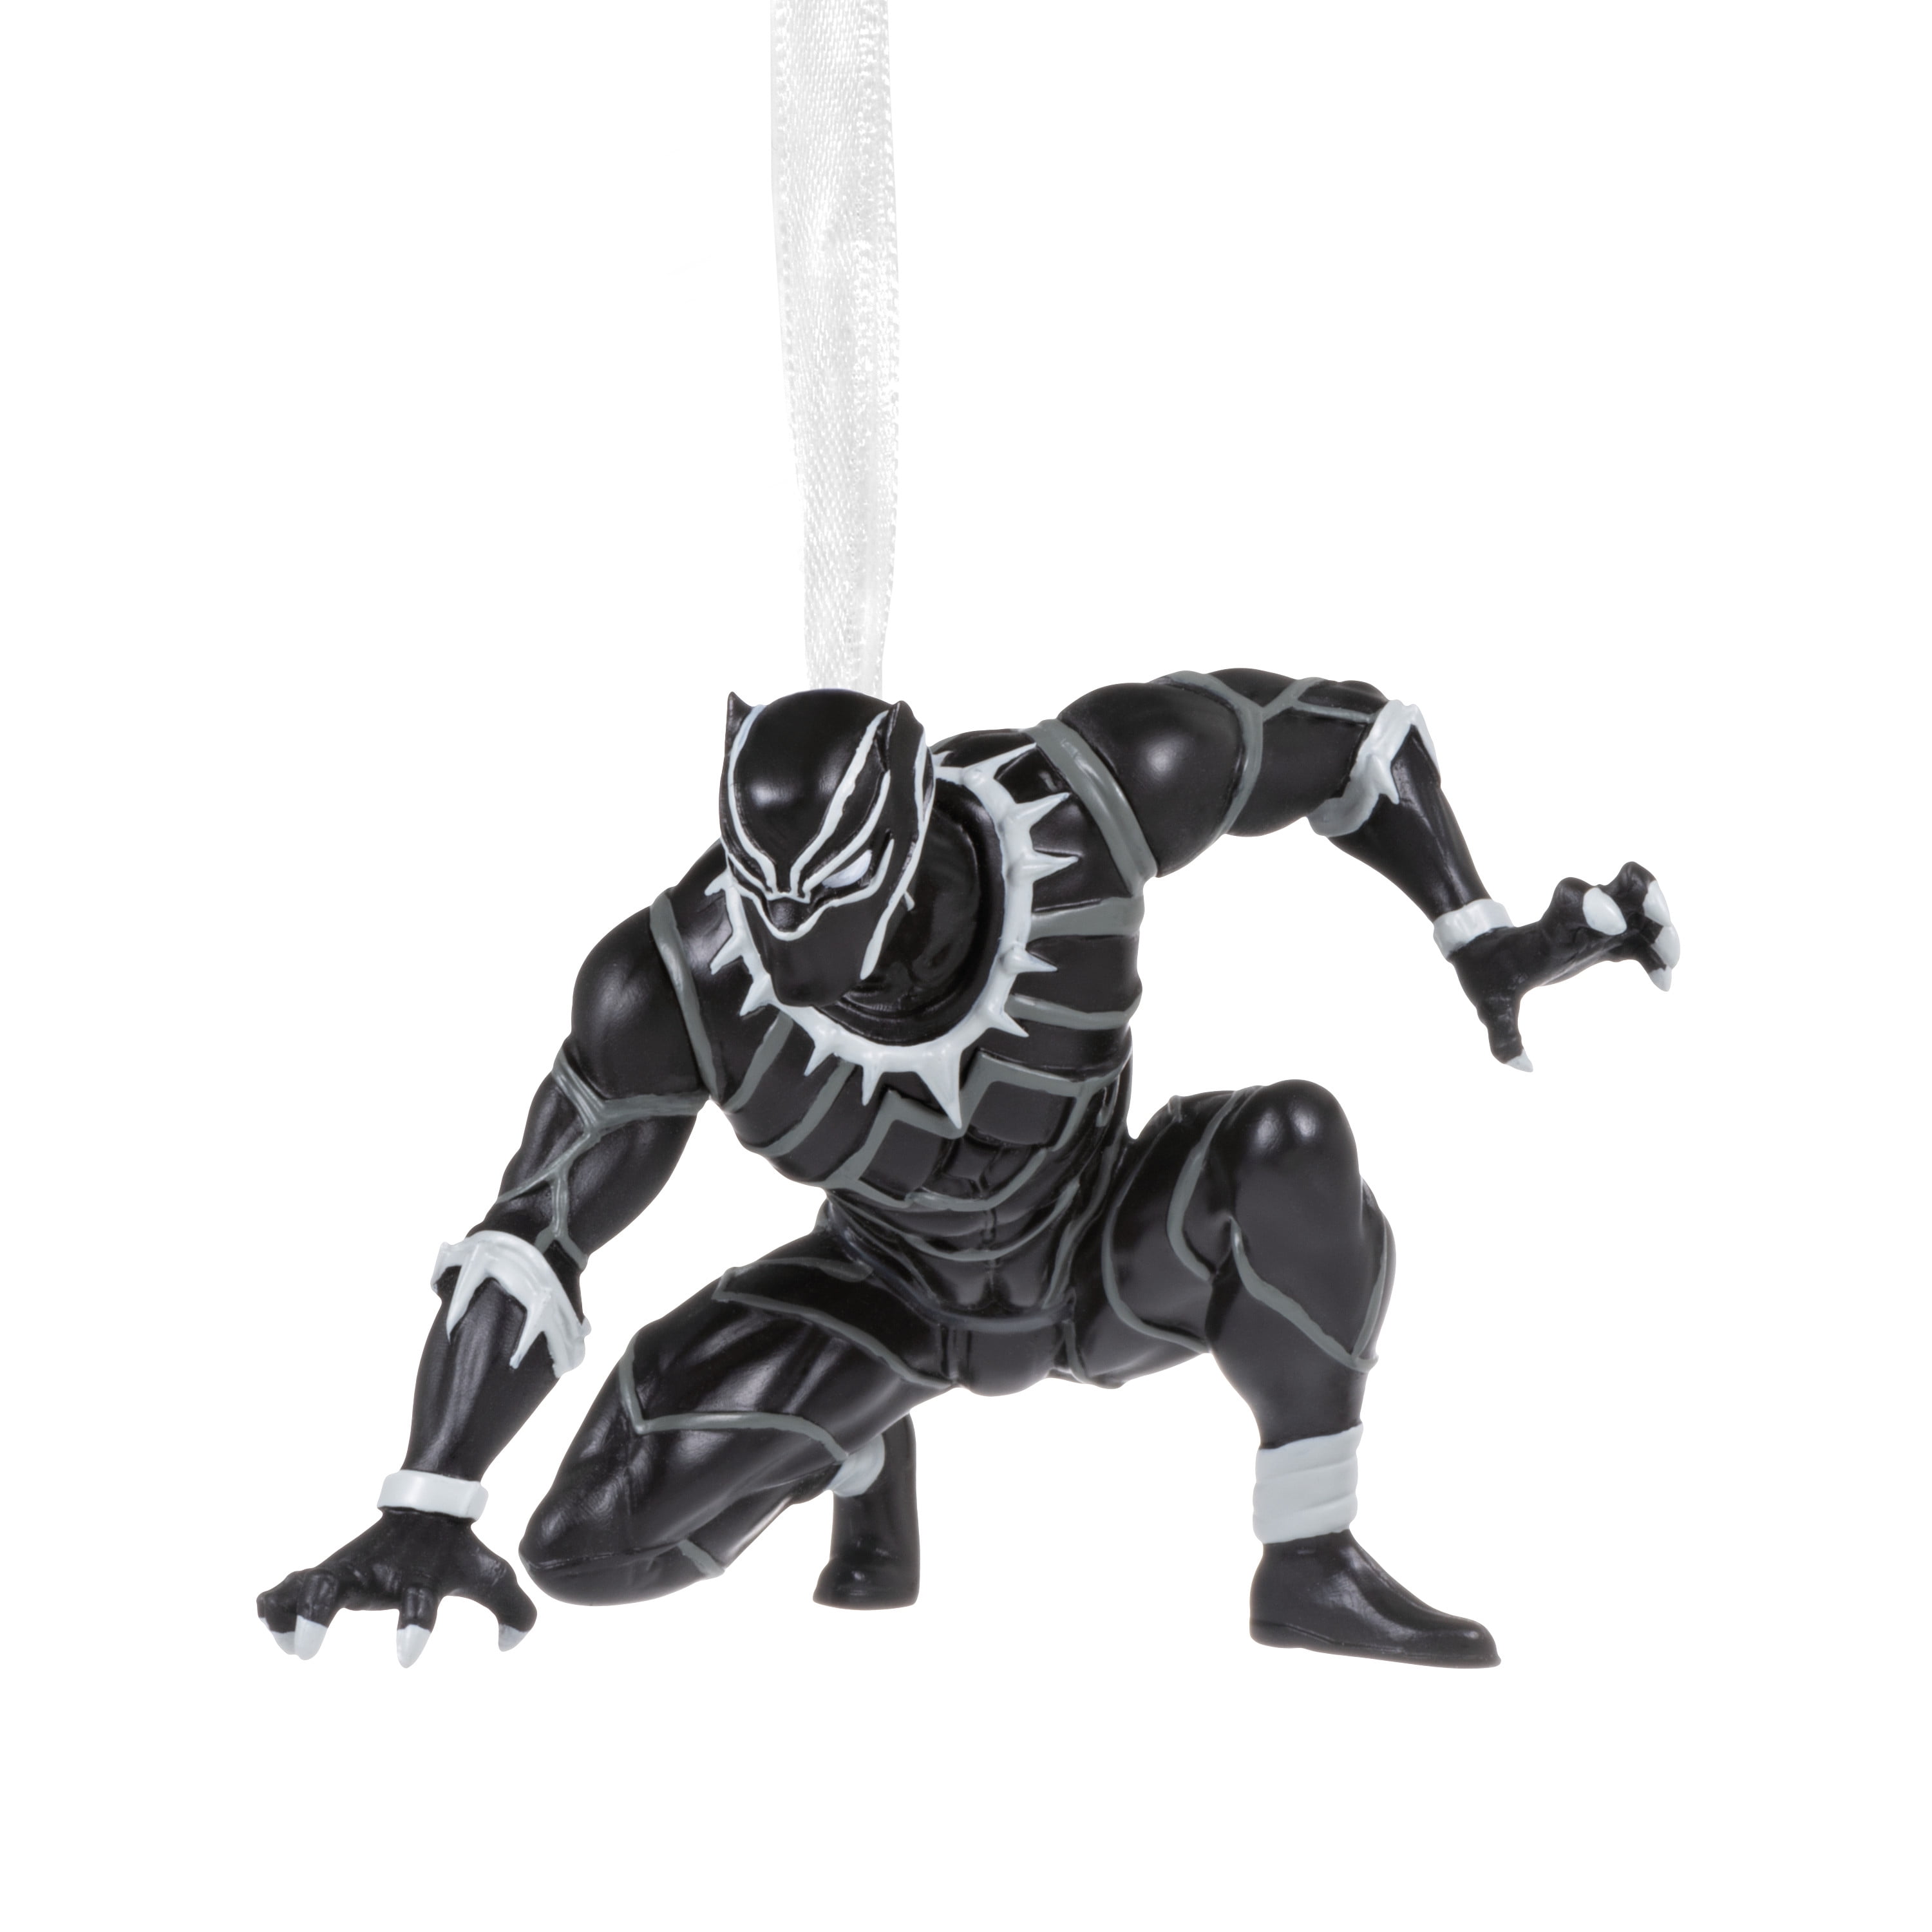 Hallmark Ornament (Marvel Black Panther)